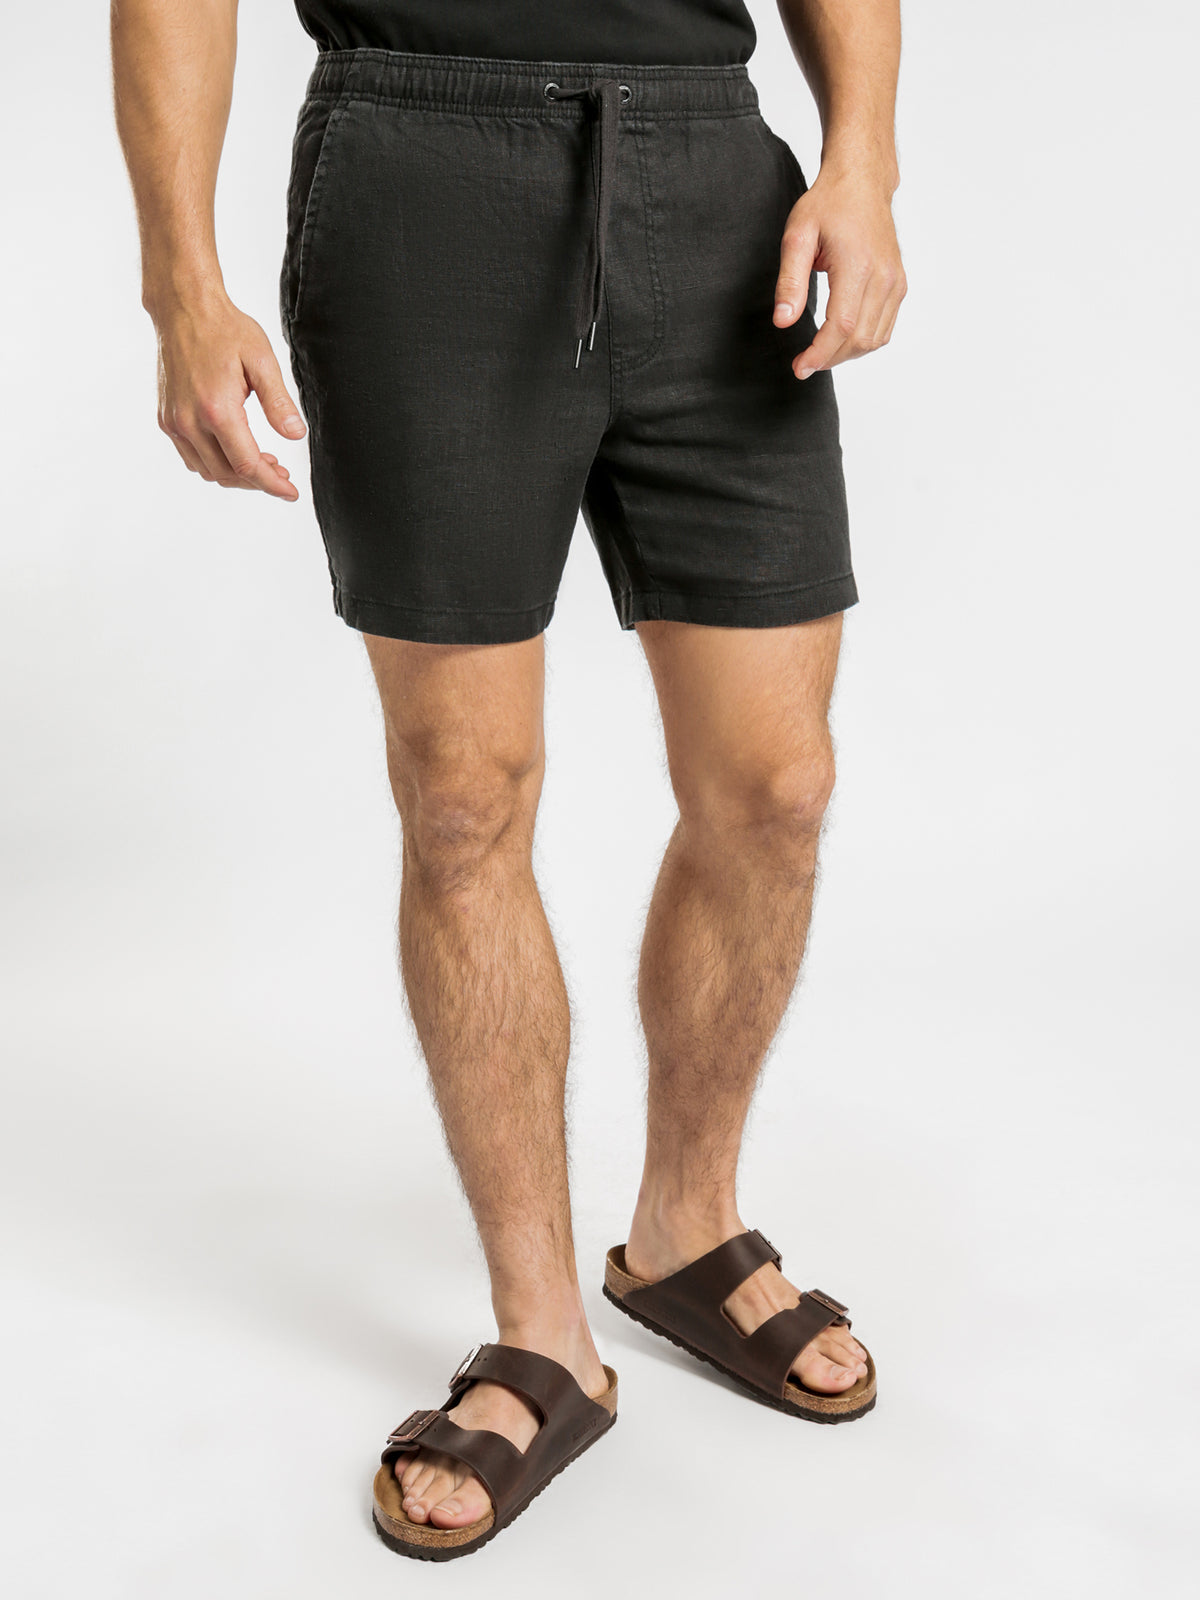 Nelson Shorts in Black Linen